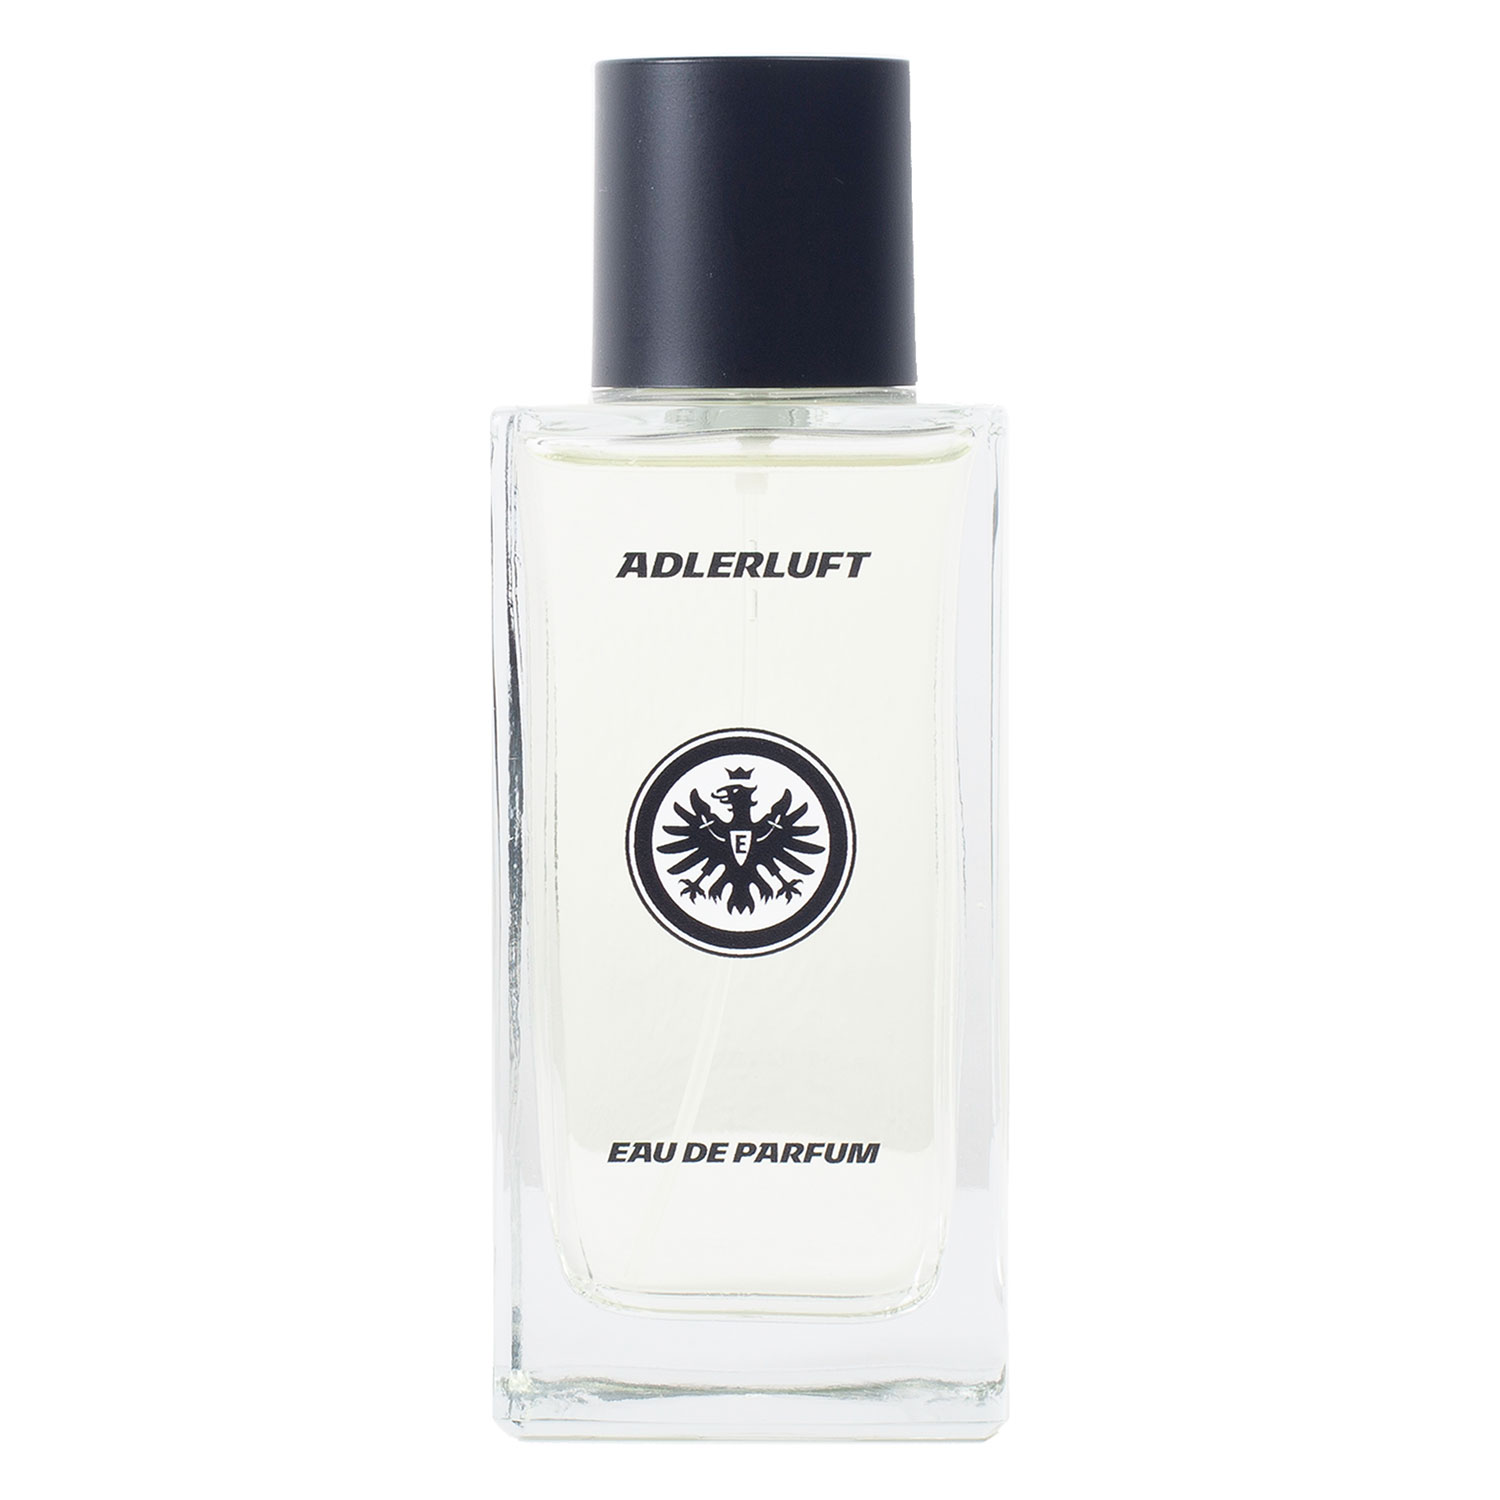 Bild 1: Adlerluft, Eau de Parfum (40 € / 100 ml)